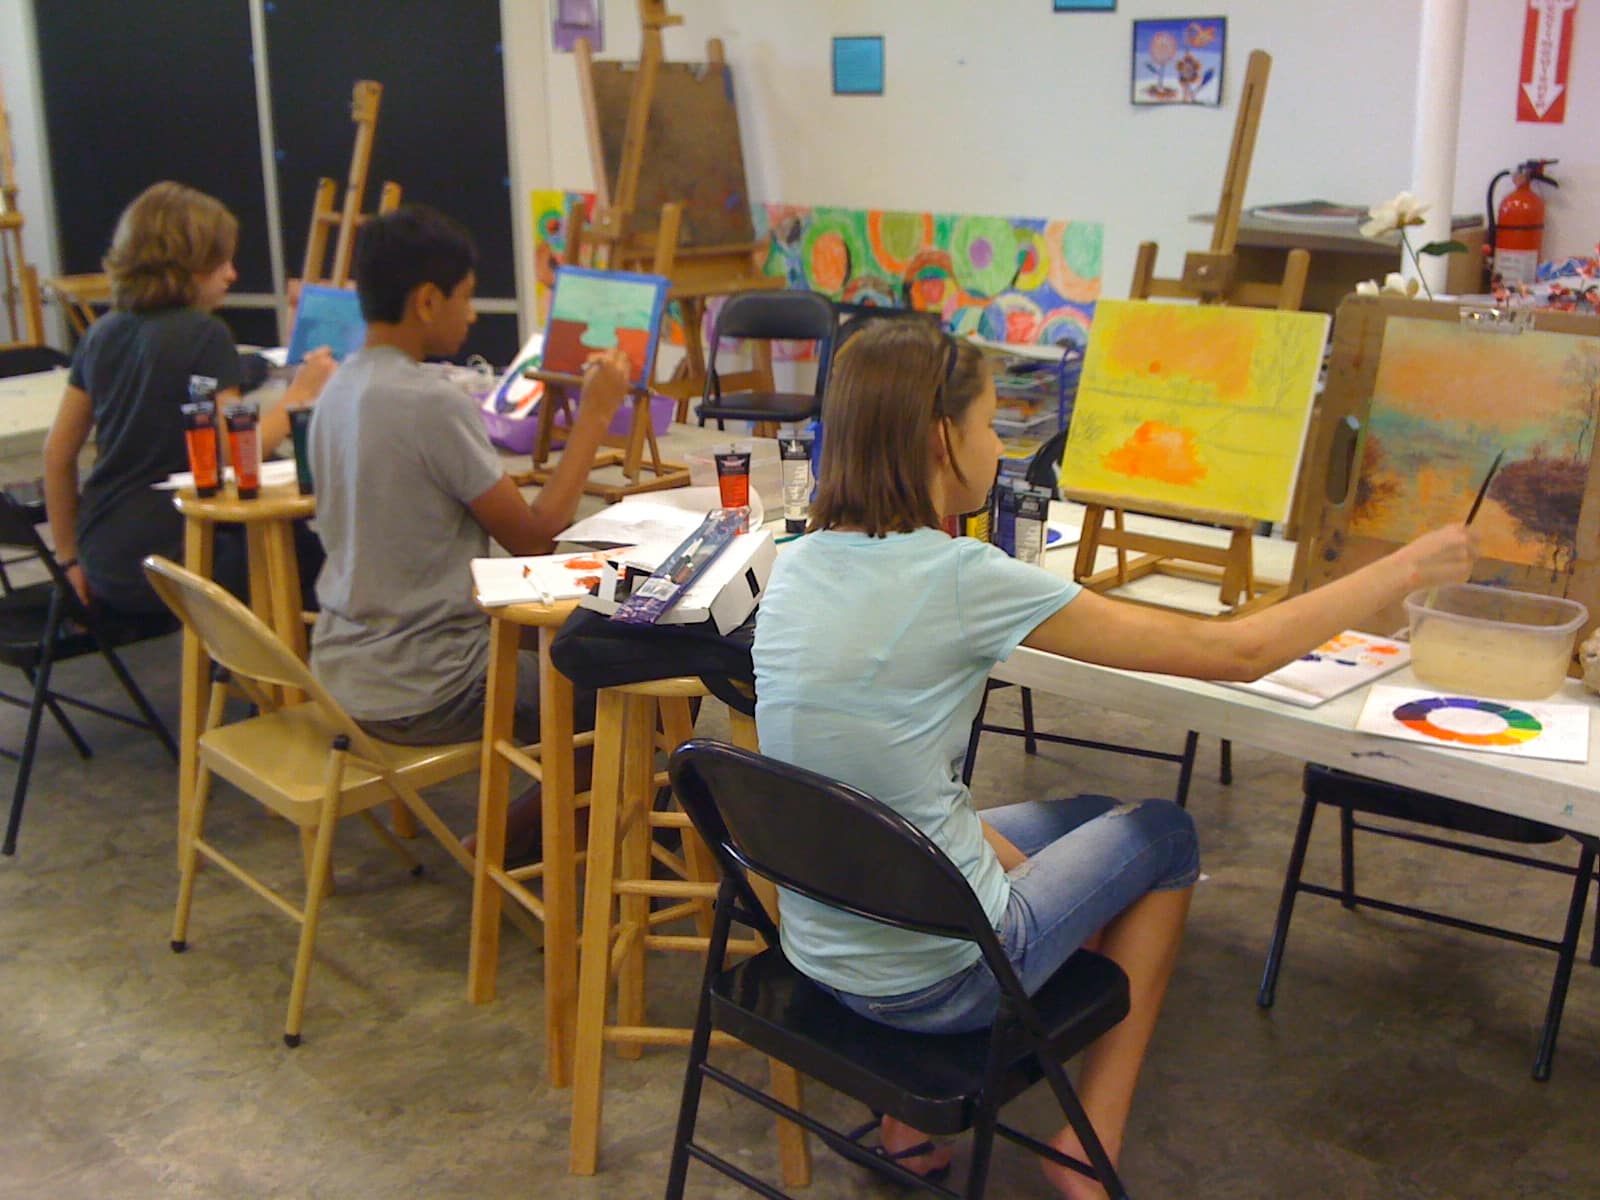 Free Teen Art Classes Held 36